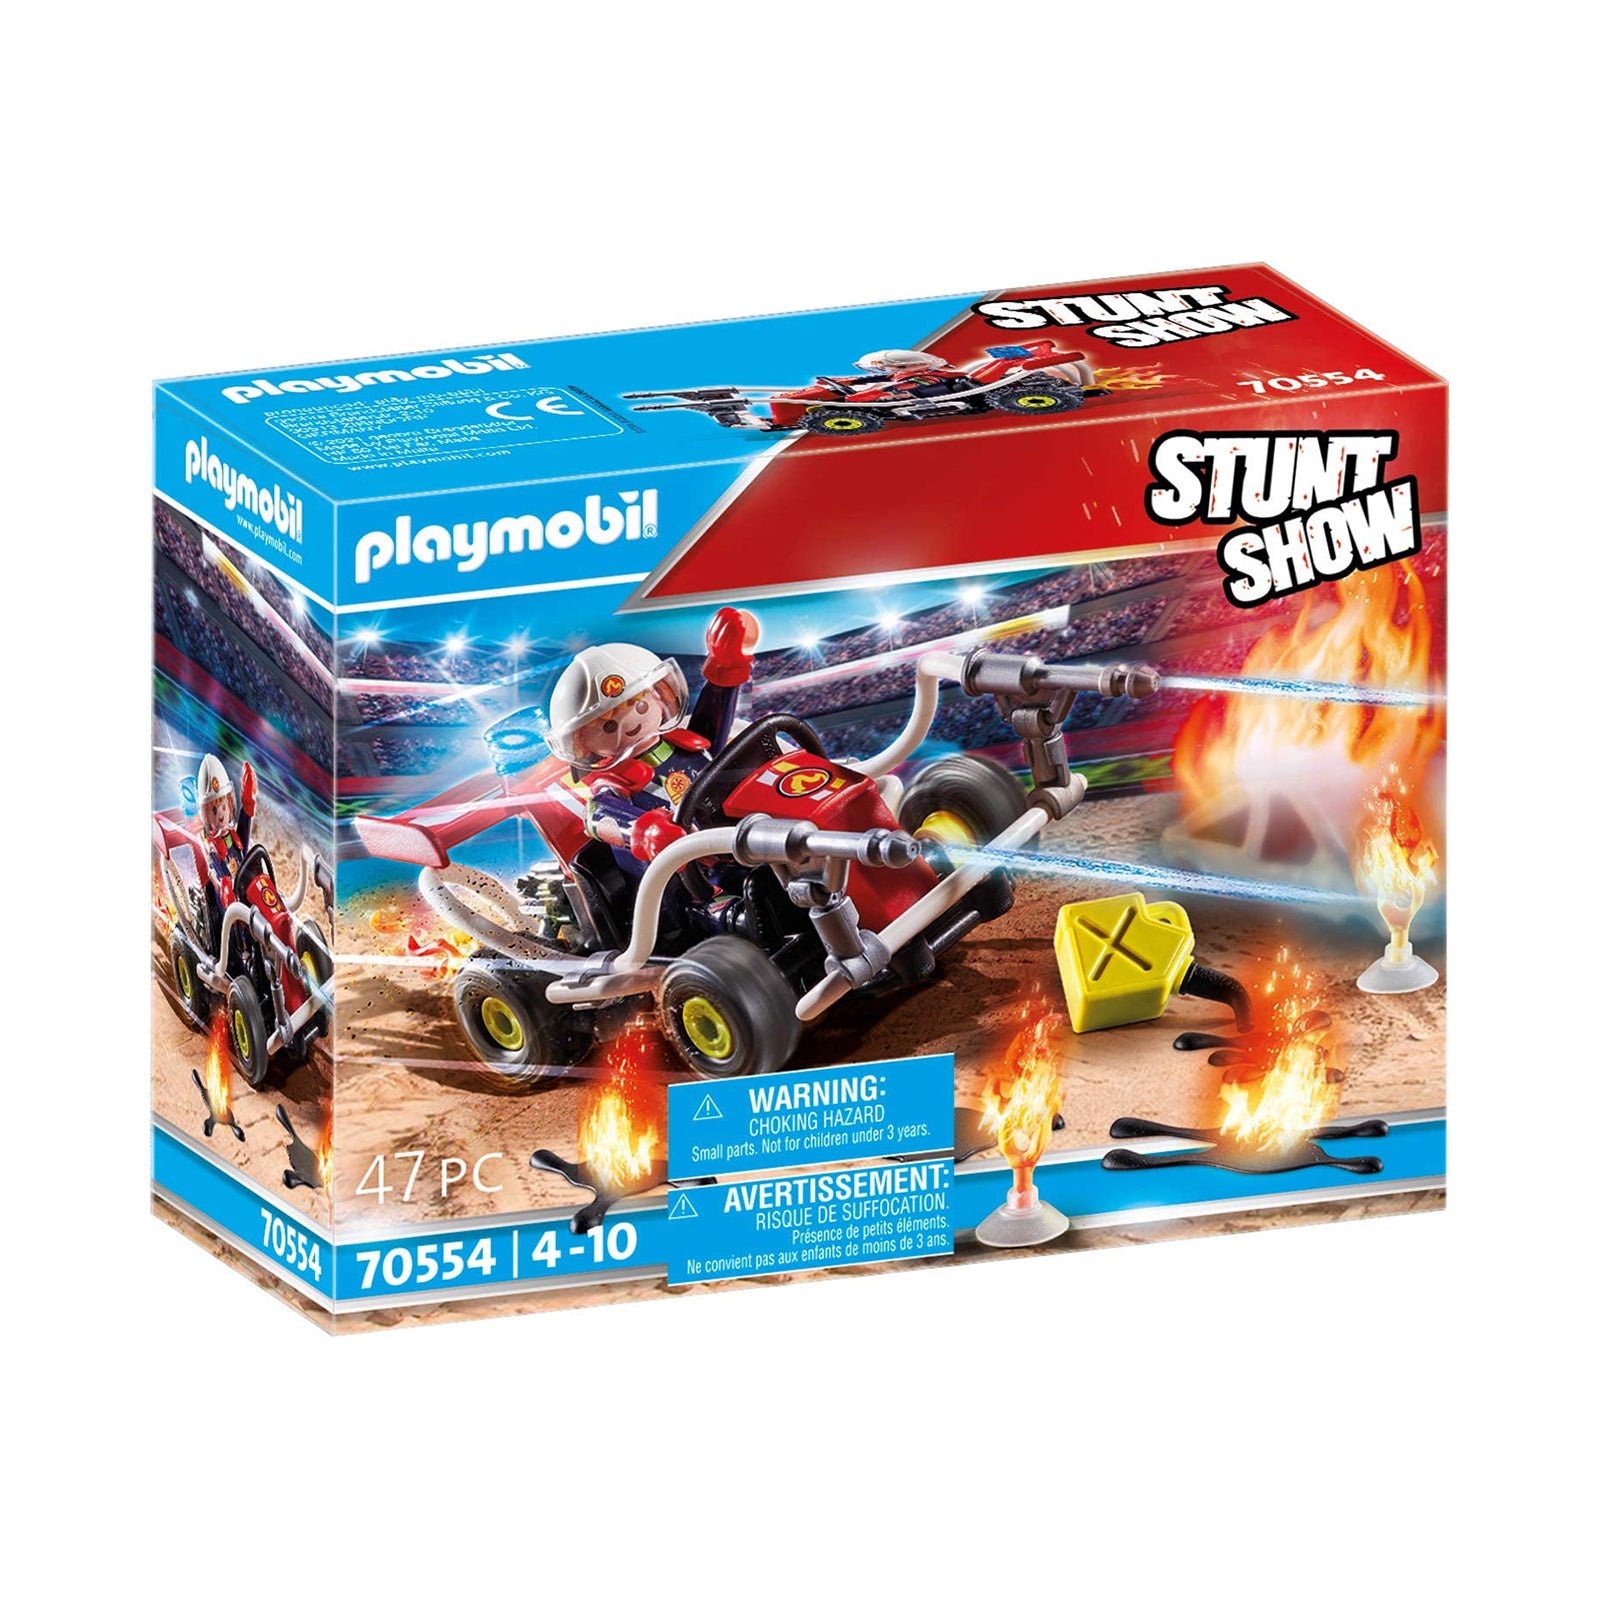 Playmobil Stunt Show Fire Quad Building Set 70554